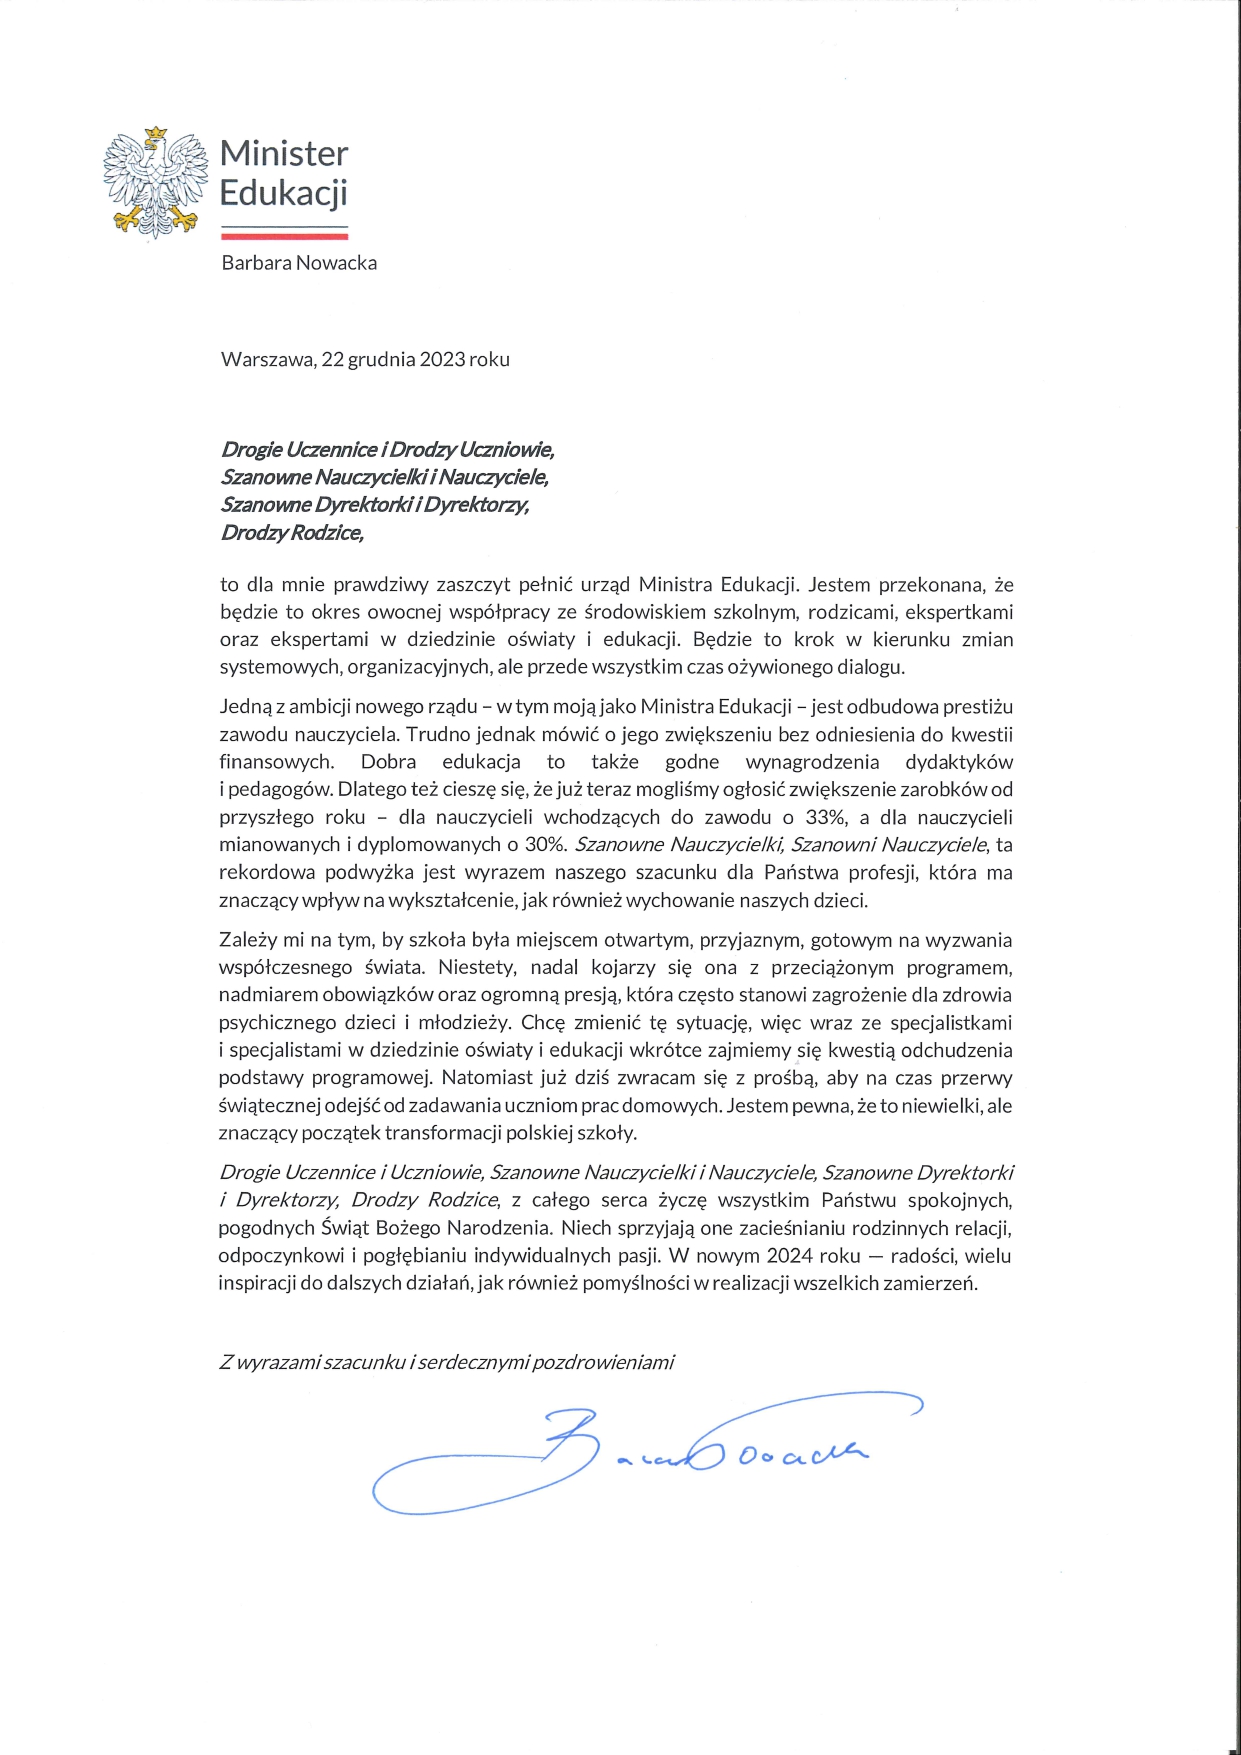 List Minister Edukacji Barbary Nowackiej